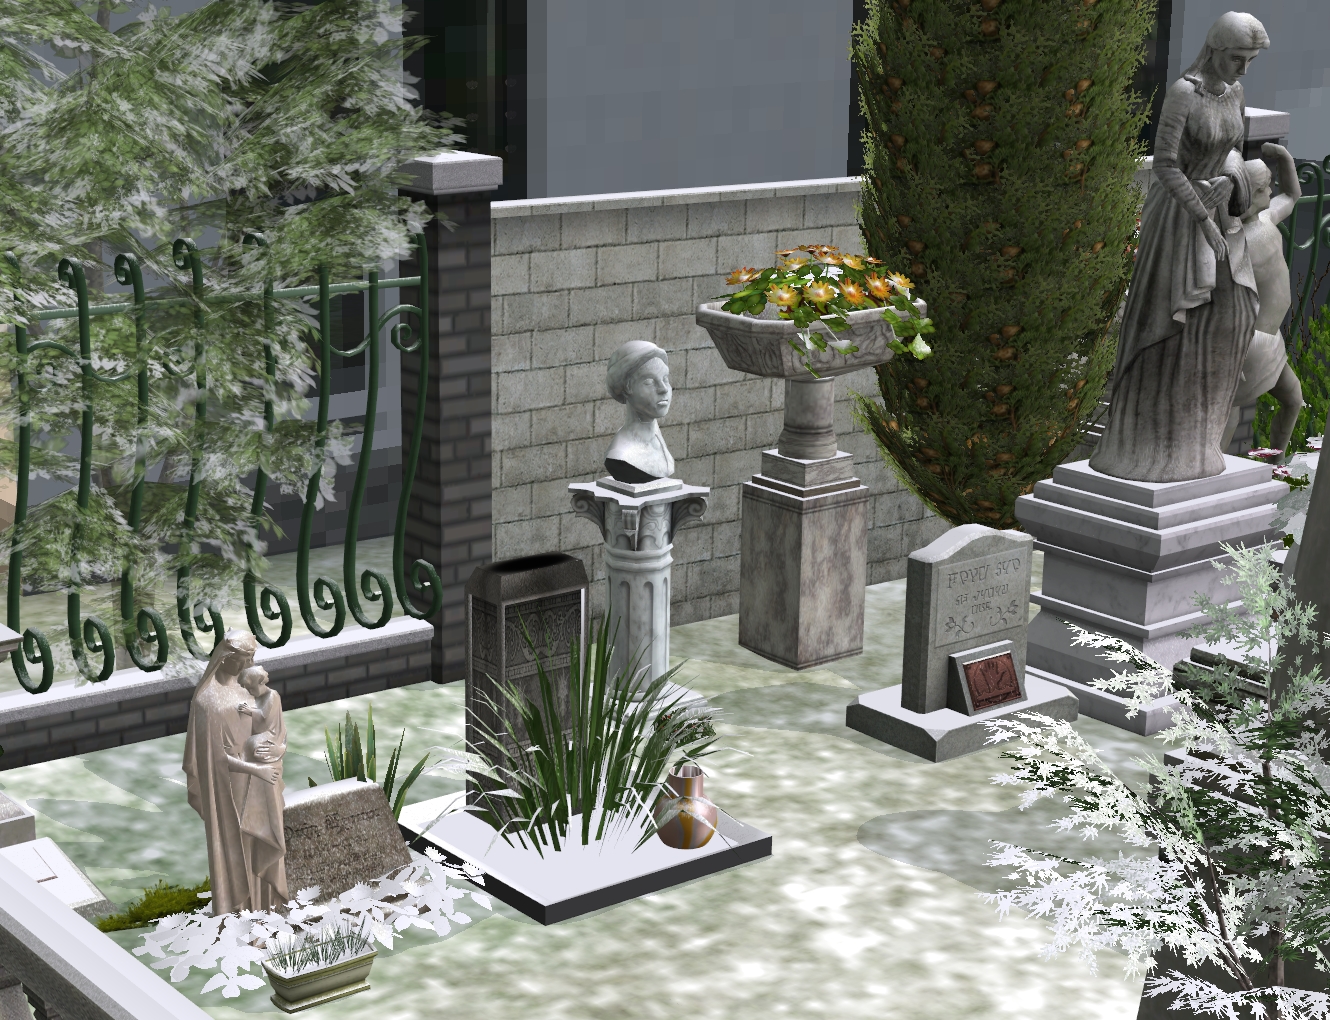 Cmentarz — groby z bliska.jpg